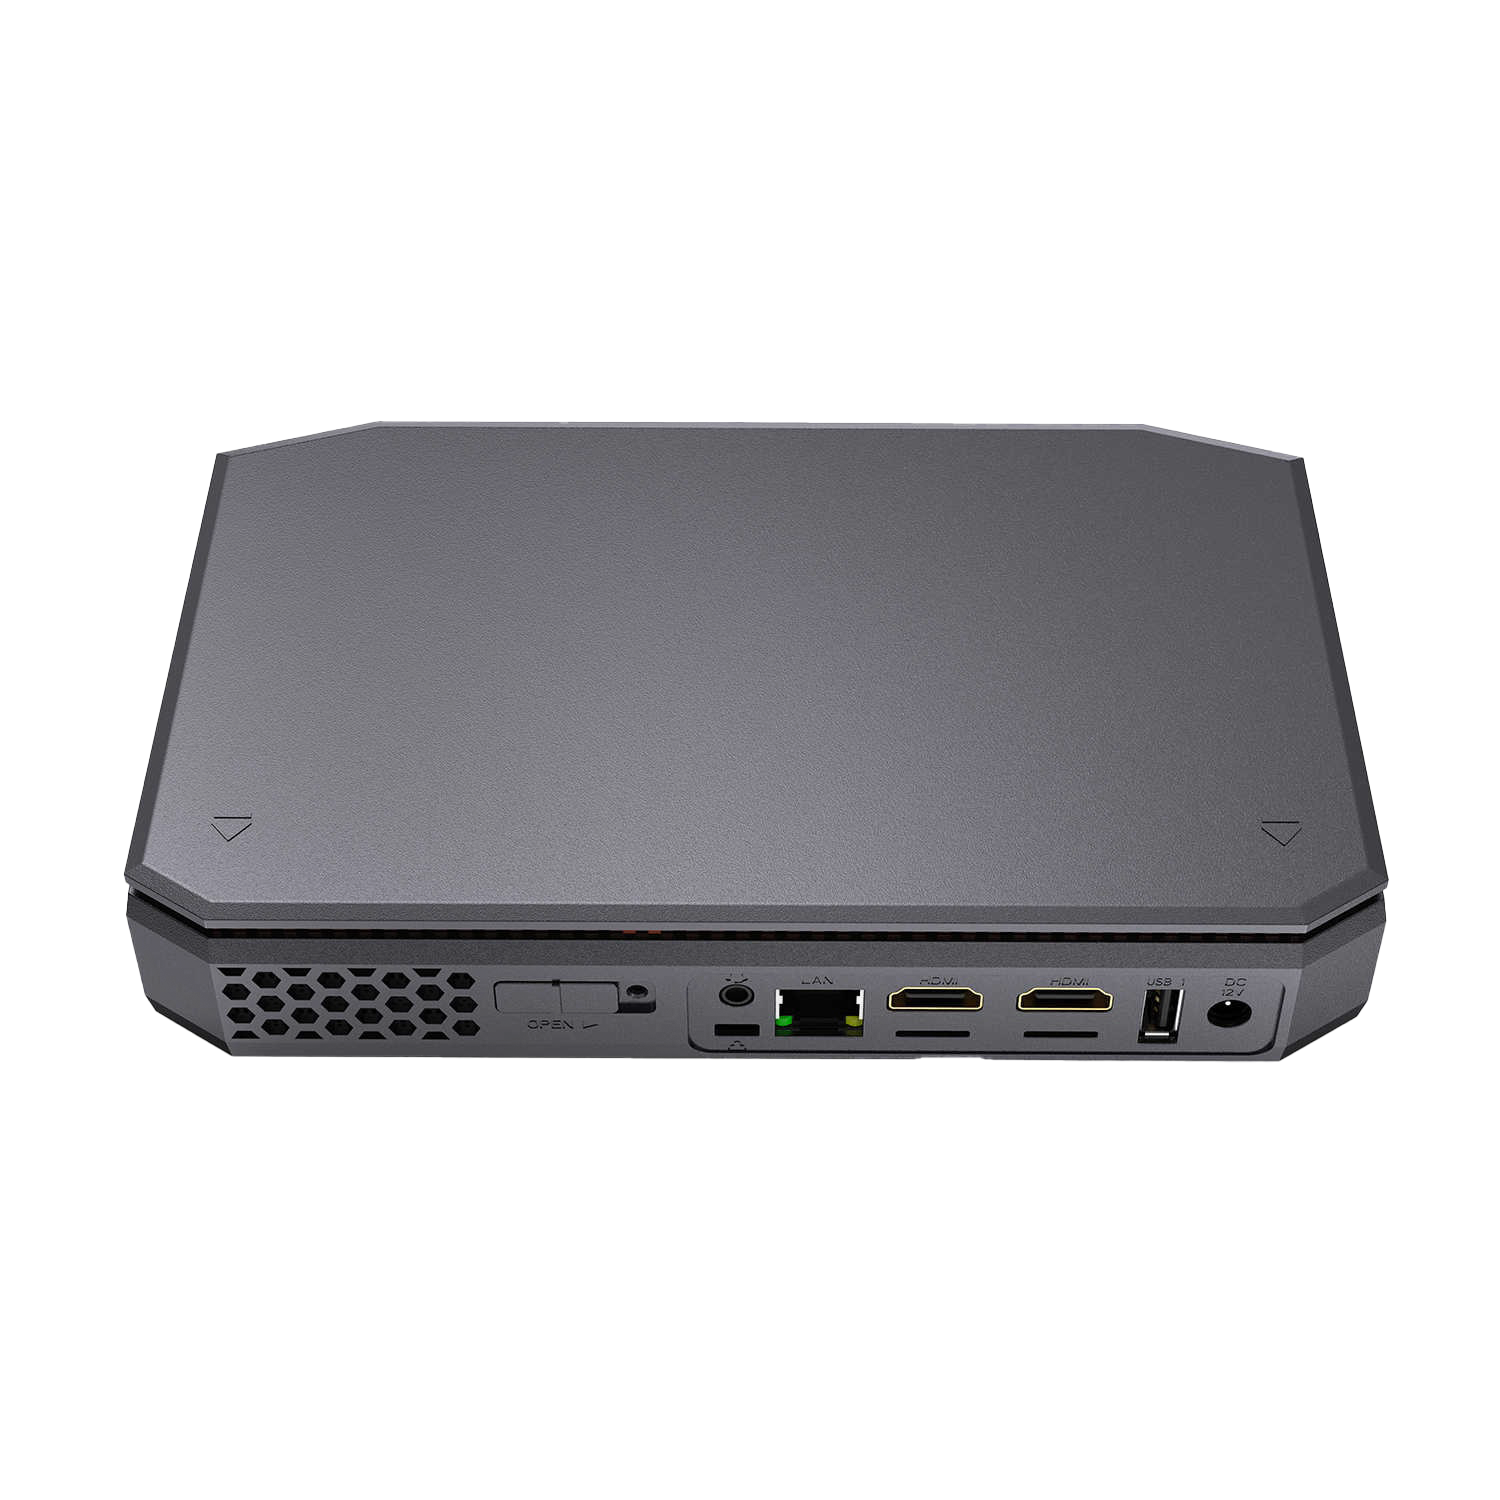 AMD T12 Windows 10 HTPC - Showing rear I/O with Power Supply Port, 2x HDMI Ports, 1GB/s LAN Port, Kensington Lock and 3.5mm Headphone Jack